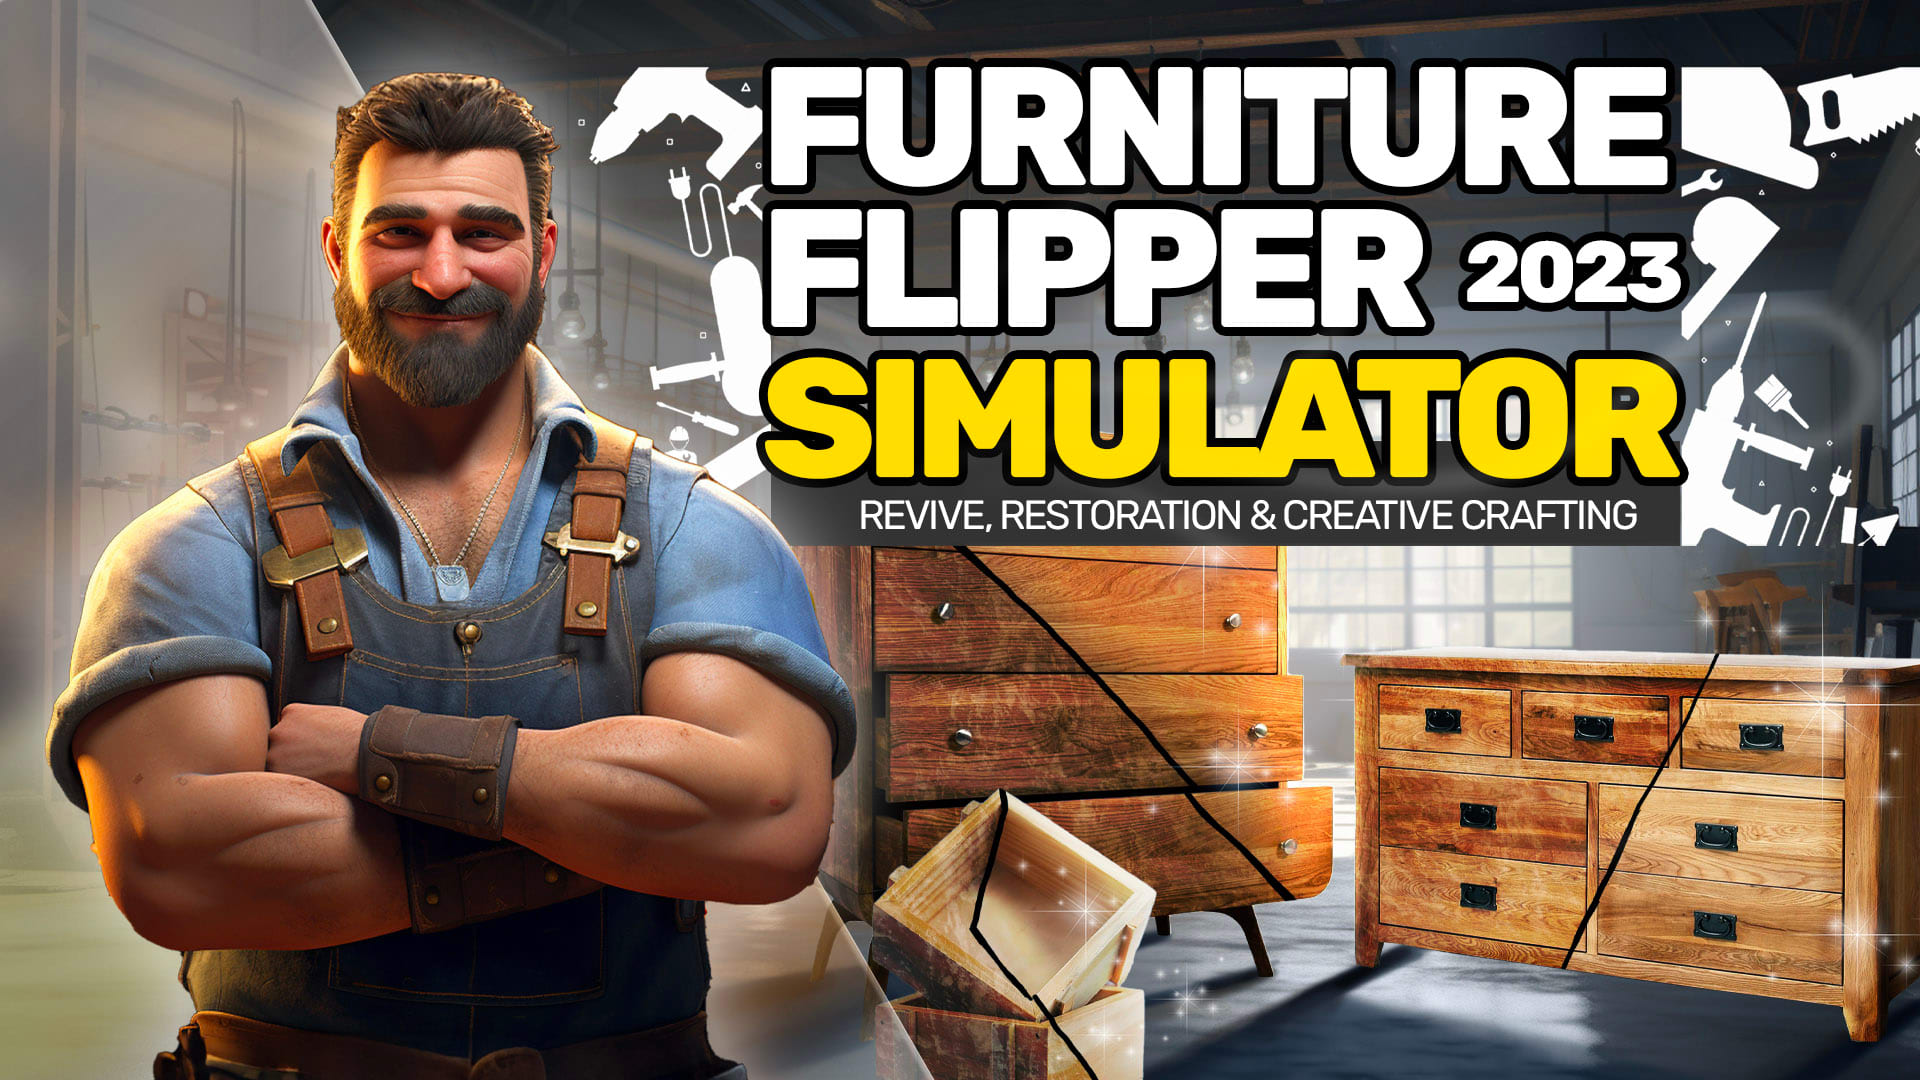 Furniture Flipper Simulator 2023: Revive, Restoration & Creative Crafting 1